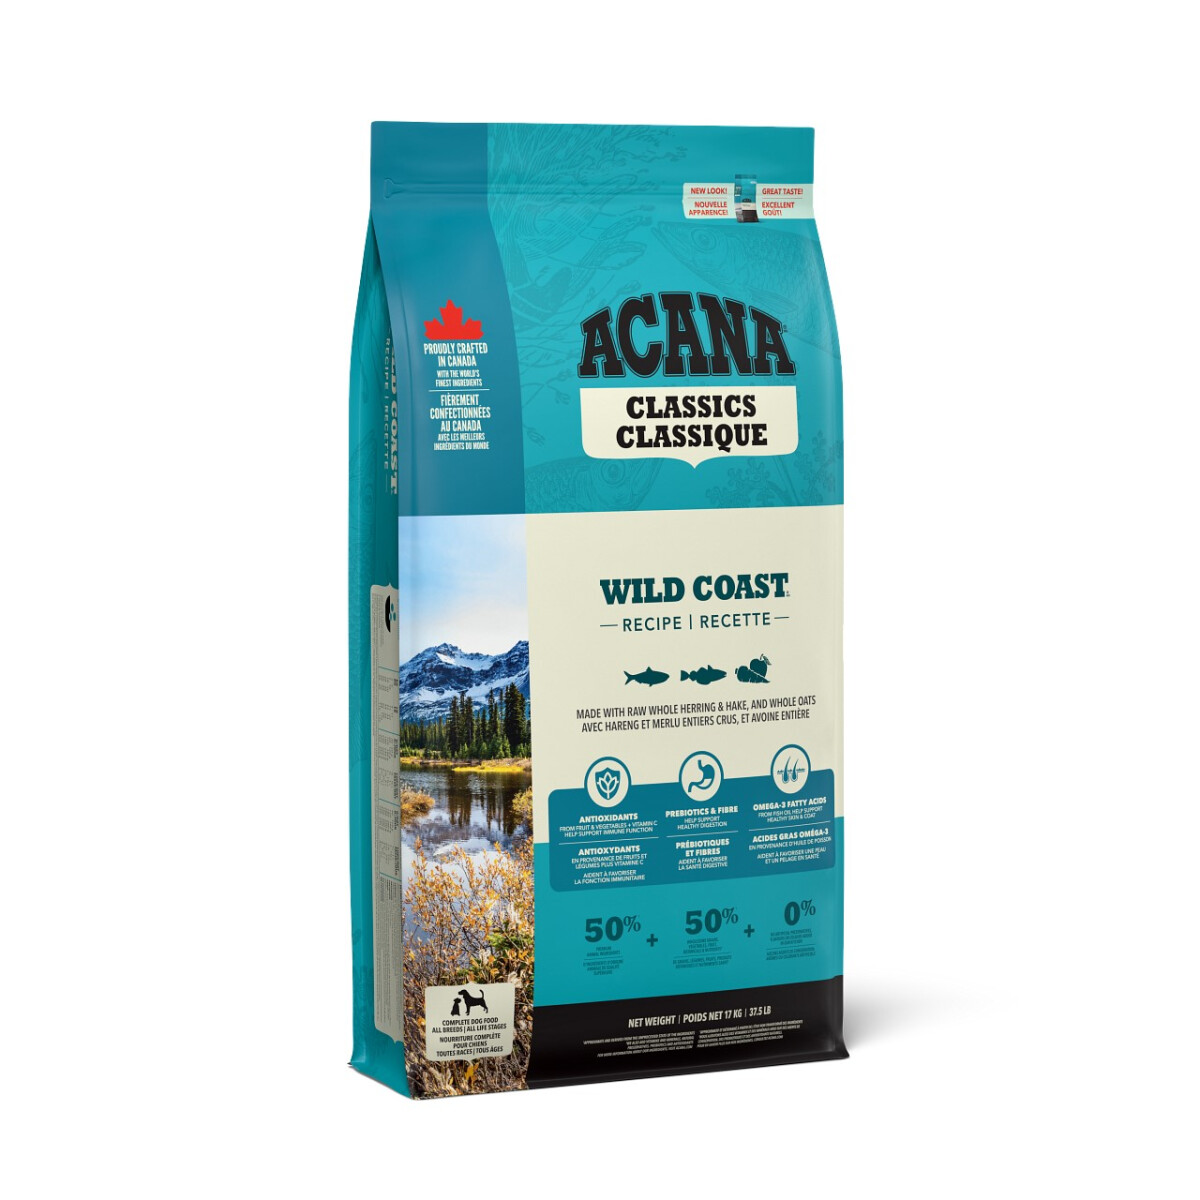 On360 - Nourriture pour chiens wild coast - ACANA Classique